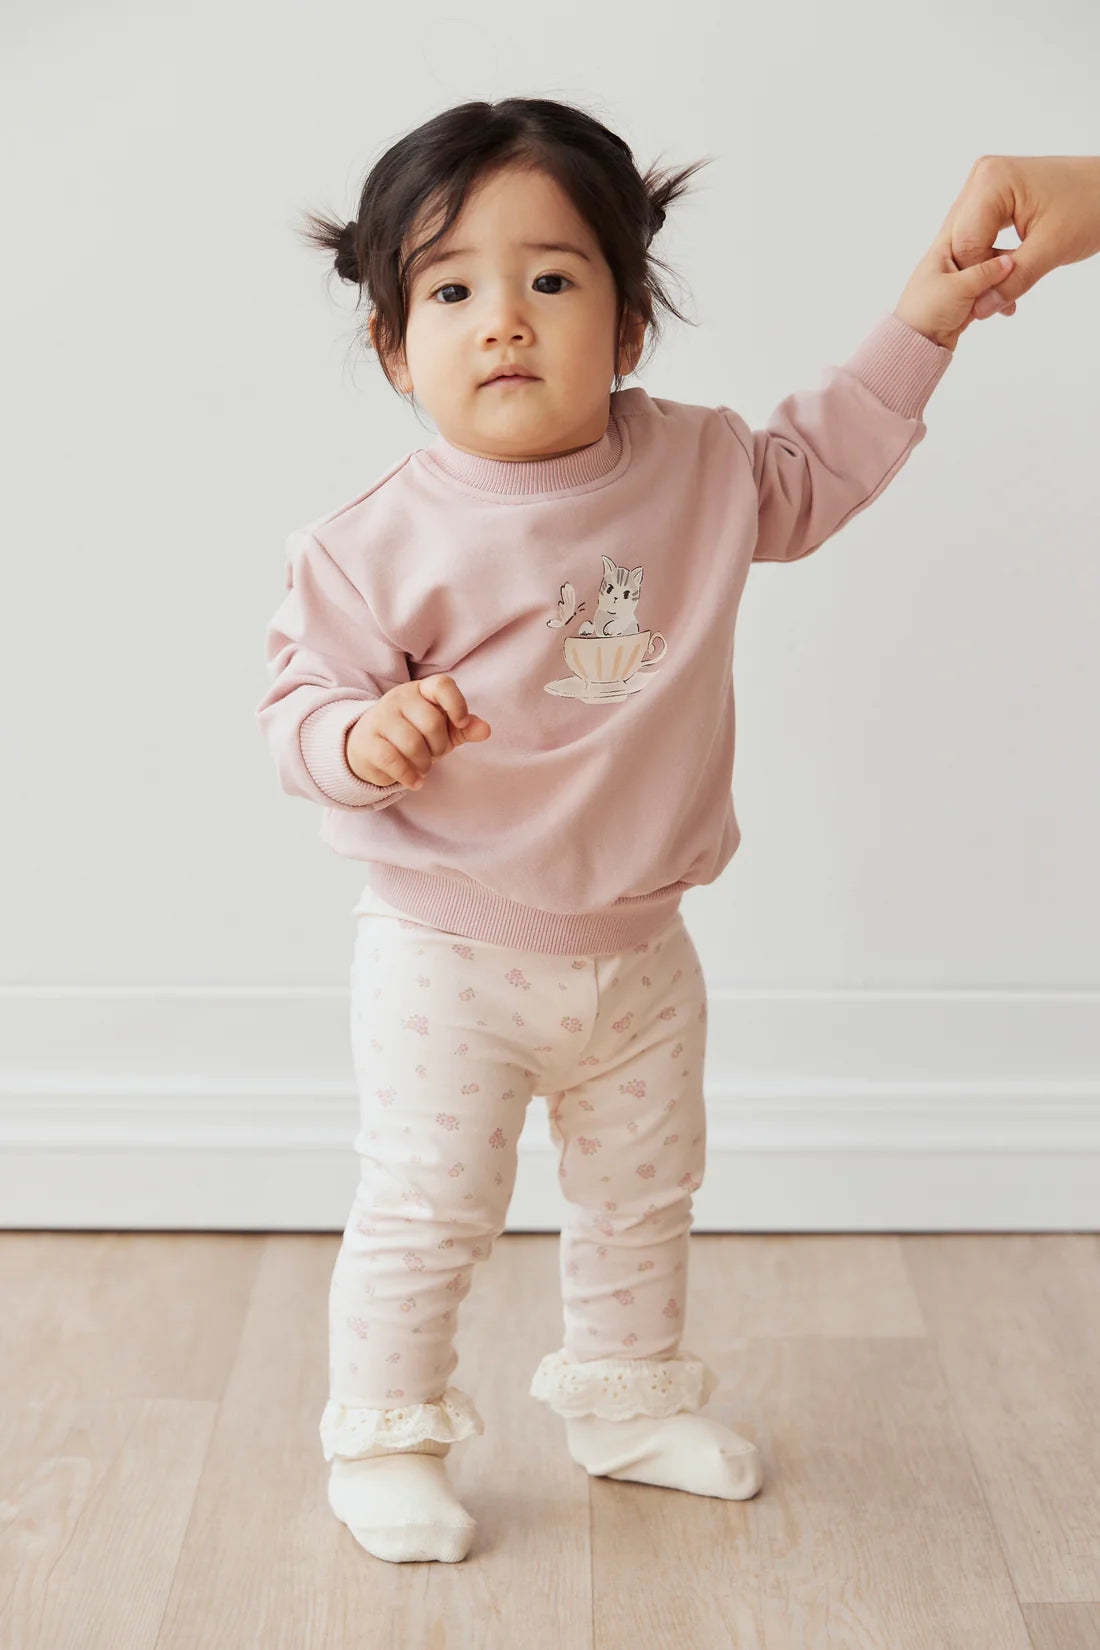 Organic Cotton Aubrey Sweatshirt - Shell Pink